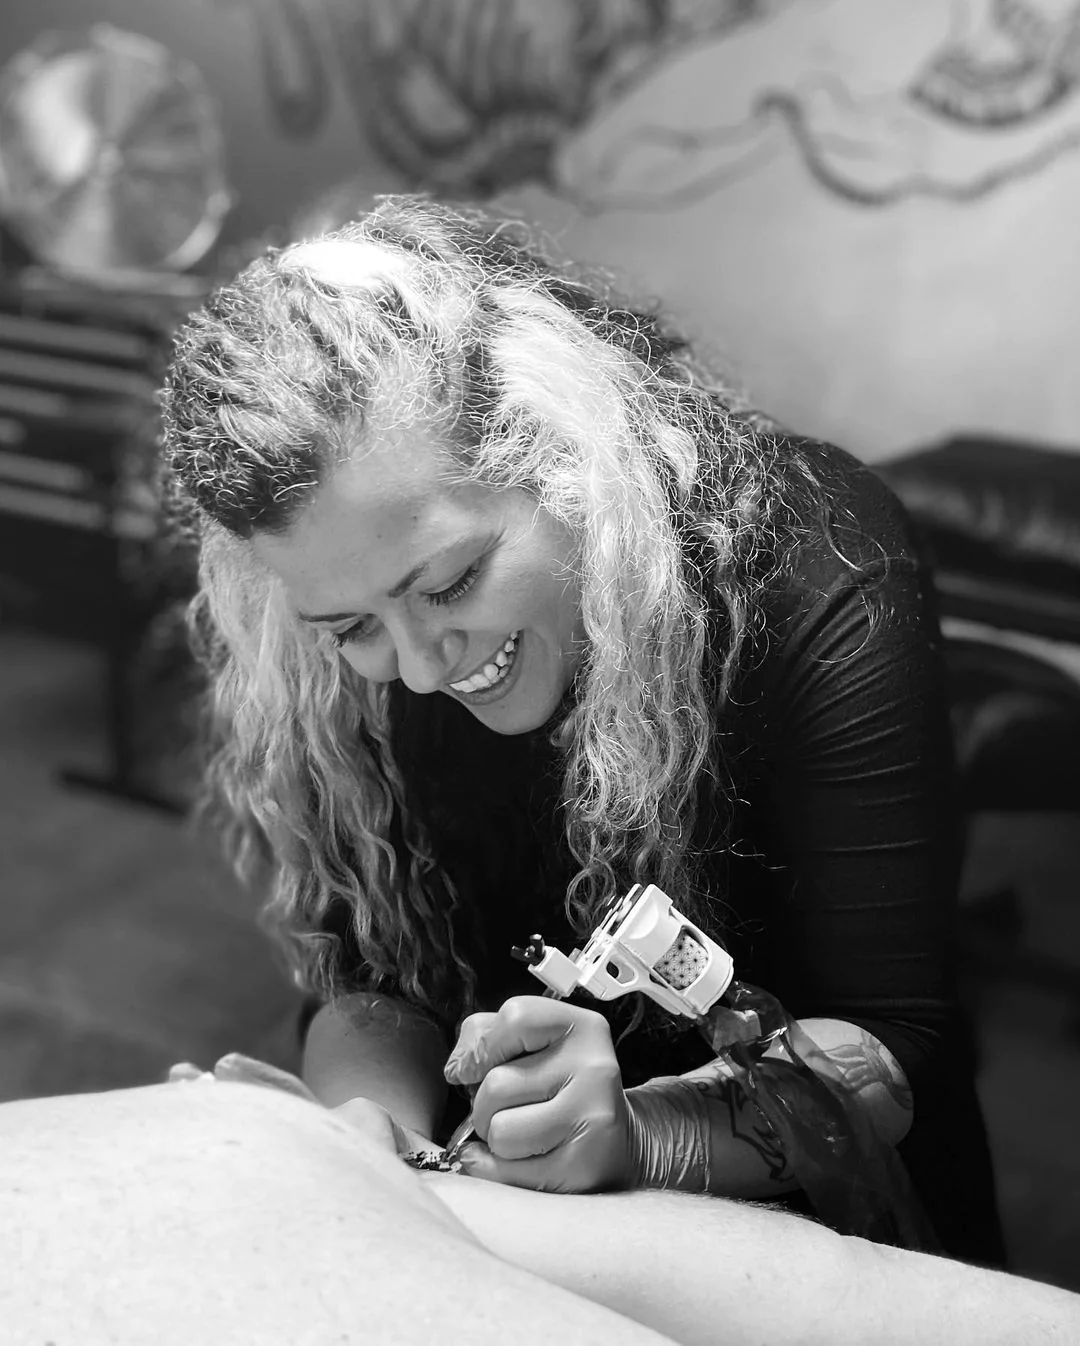 Tattoo artist from Velvet Underground tattoo studio in London.